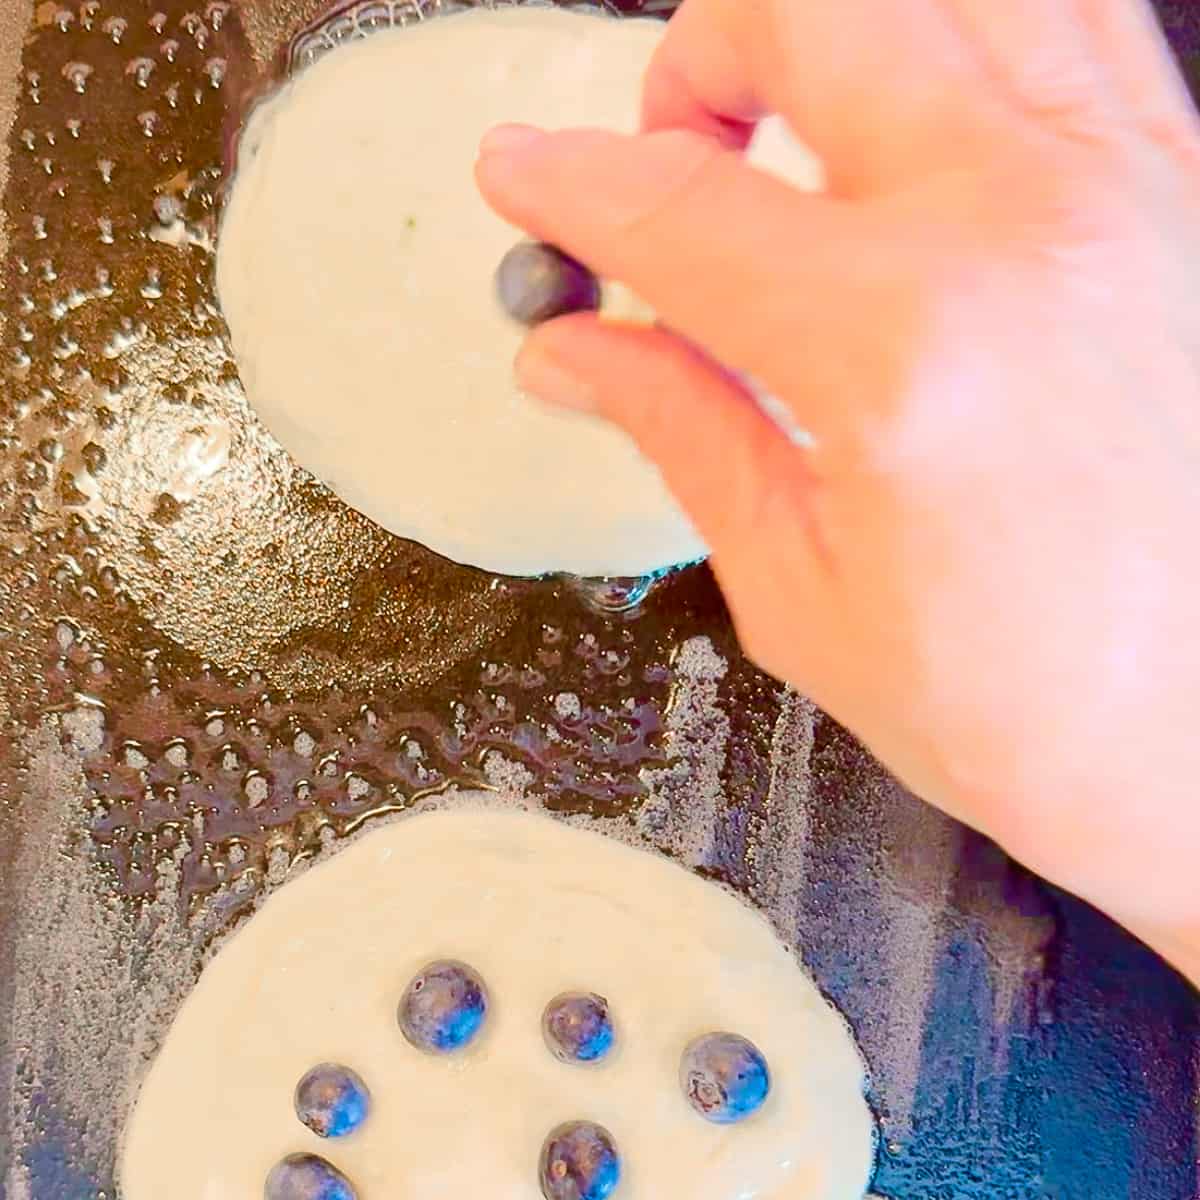 adding blueberries to lemon ricotta pancakes.